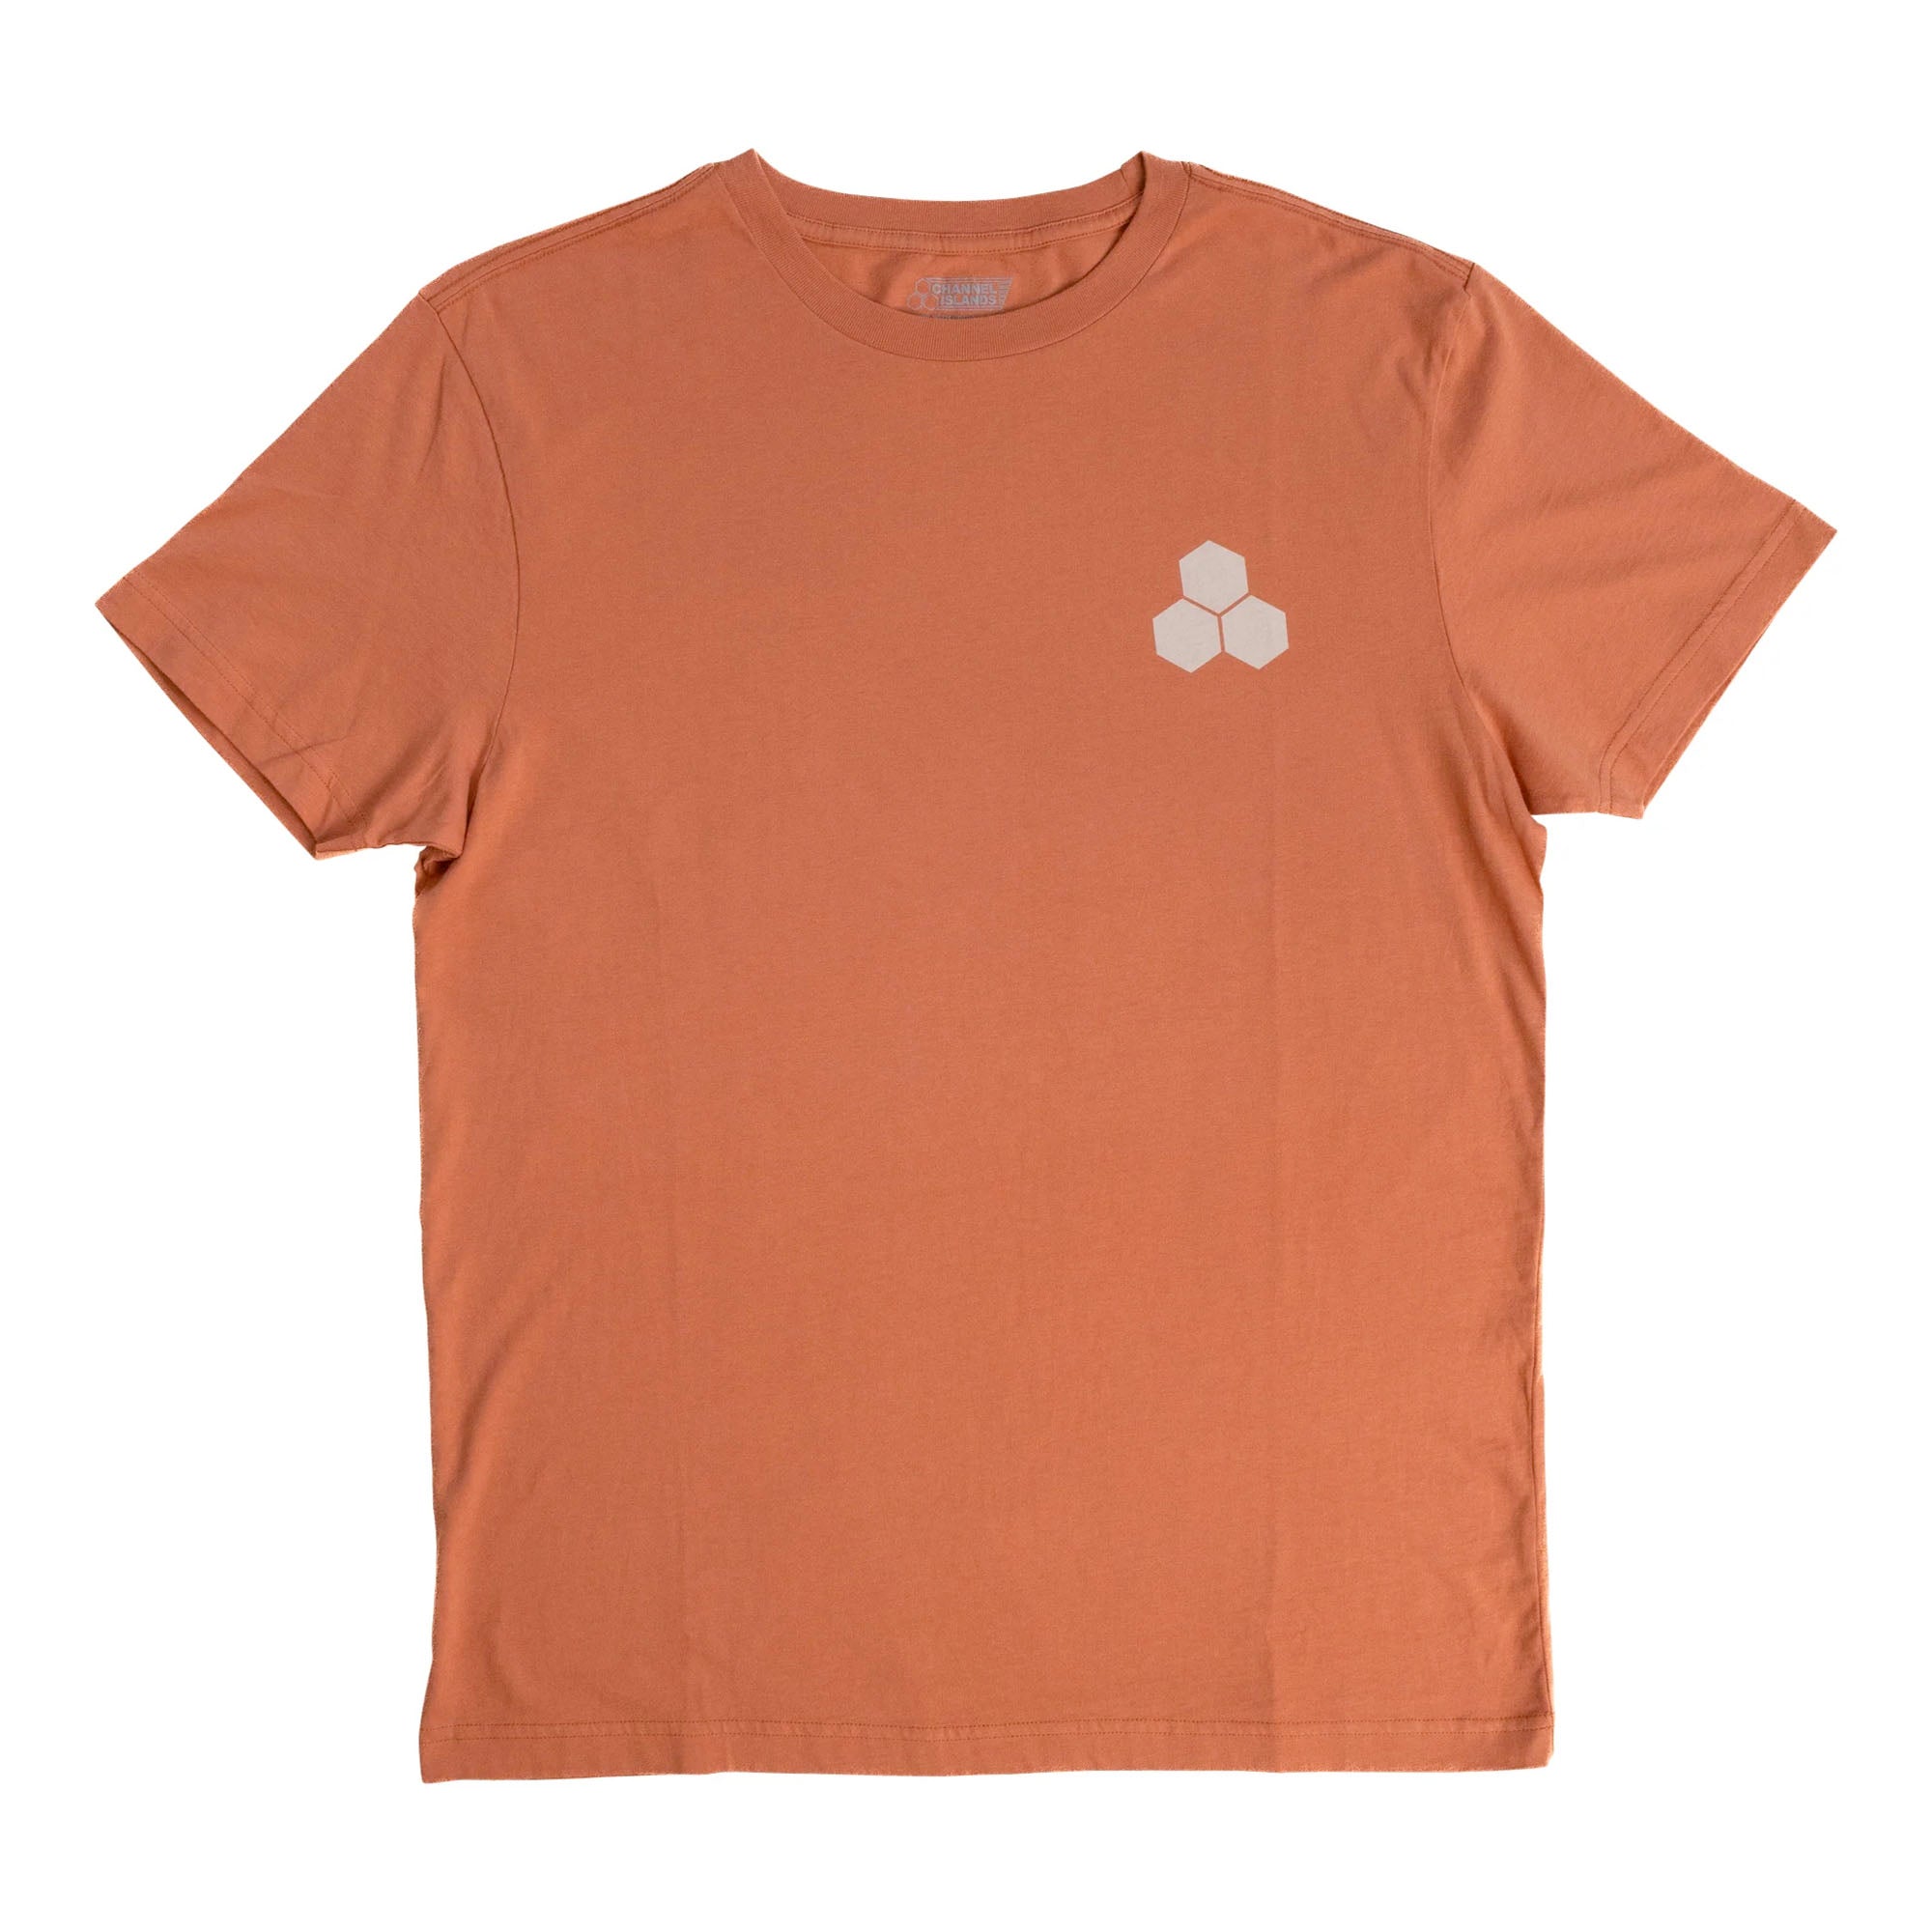 Channel Islands Solid Hex Men's S/S T-Shirt